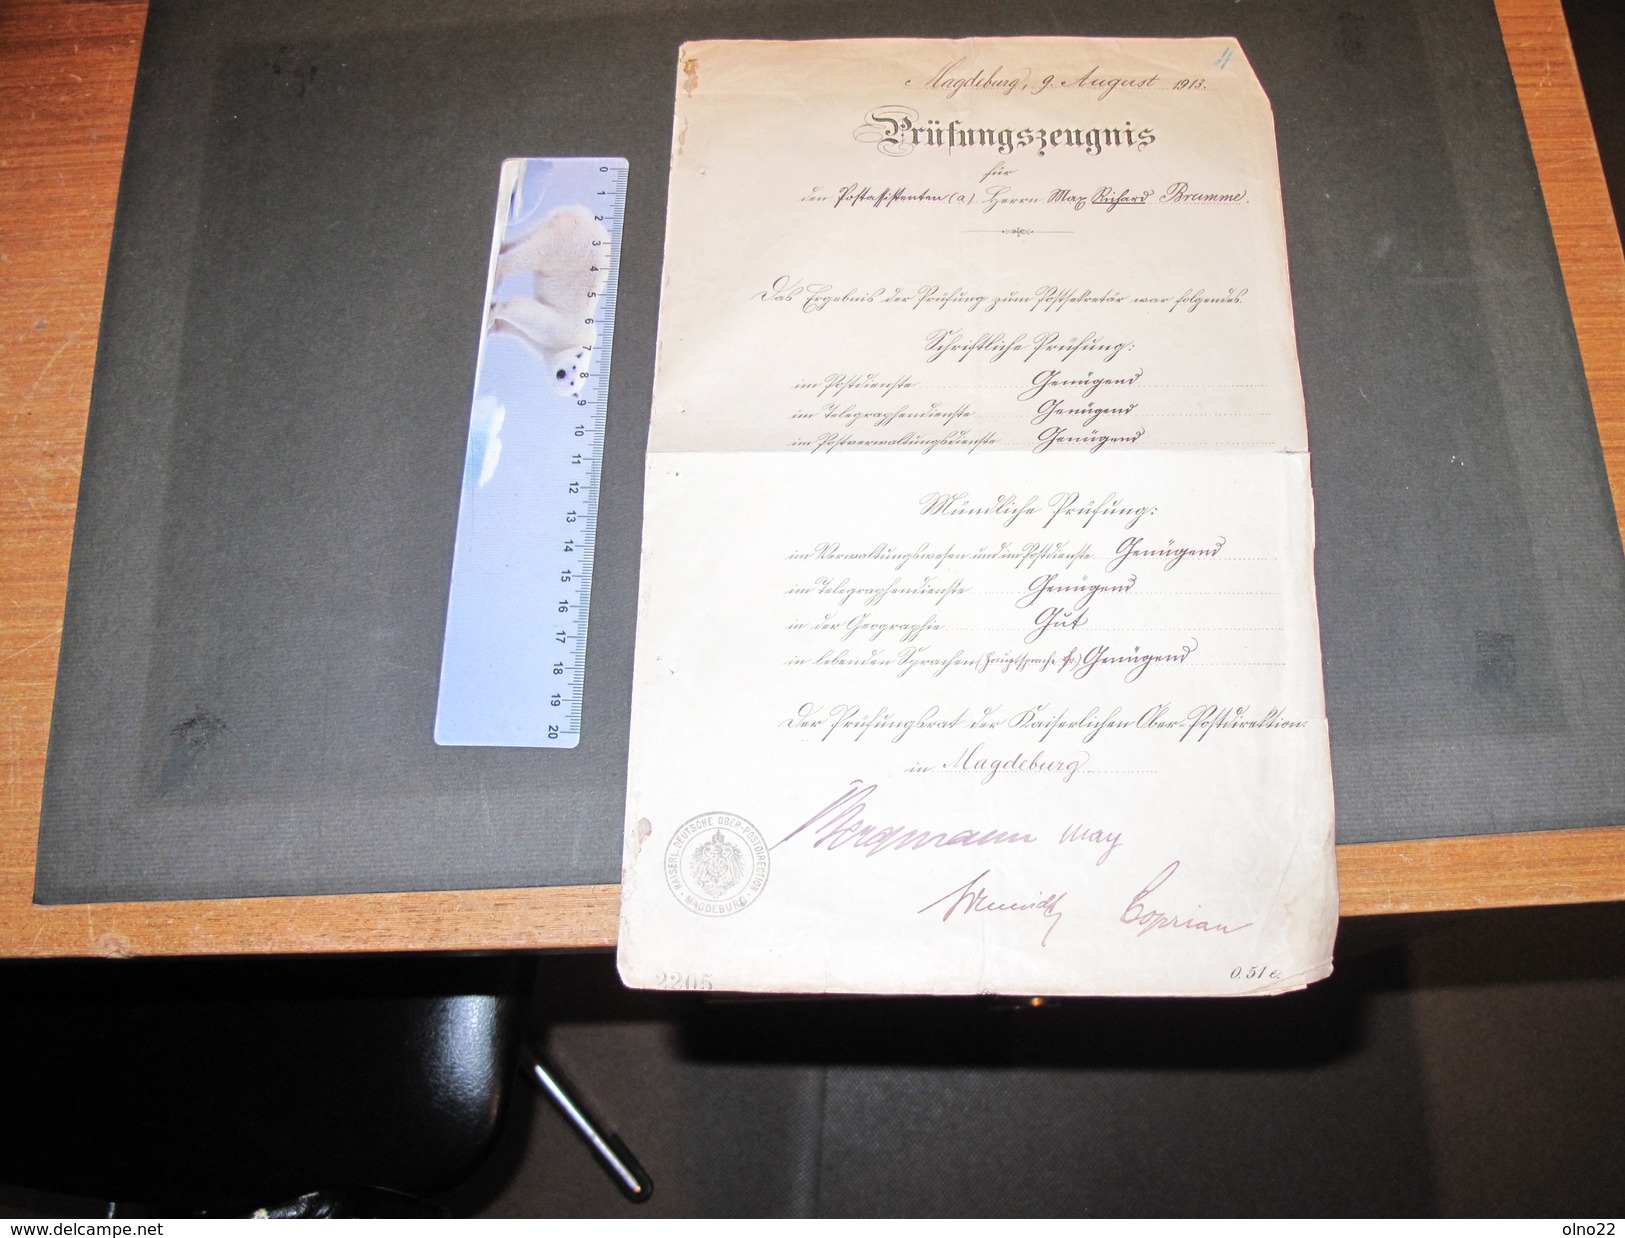 PRINZENSCHULE 1903/1904 - PRUFUNGSZEUGNIS Magdeburg 9/8/1913 -  2 Bulletins. - Diploma & School Reports